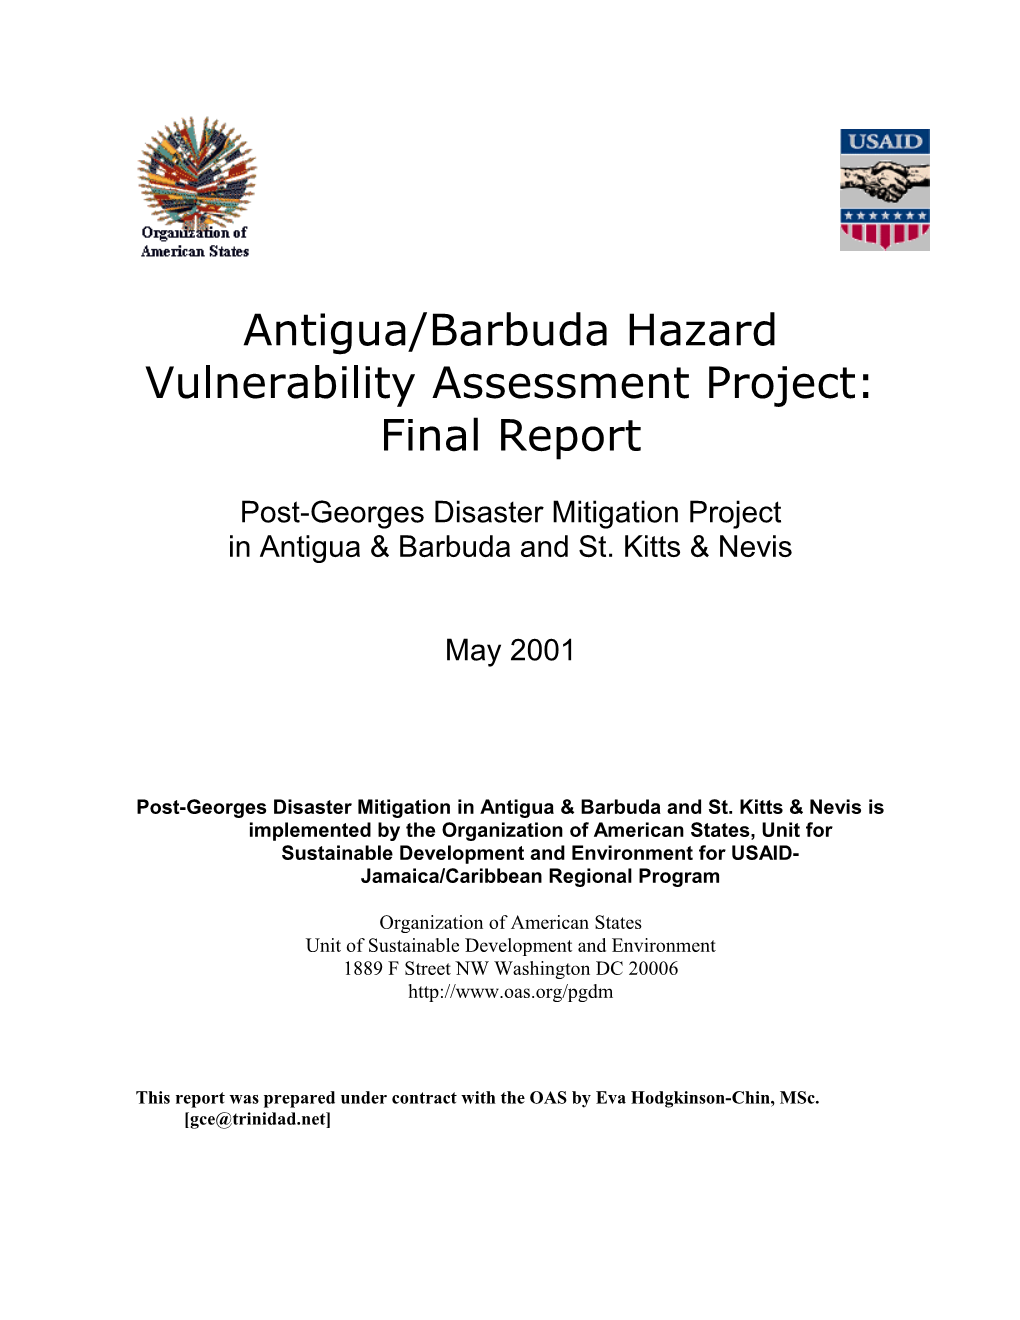 Antigua/Barbuda Hazard Vulnerability Assessment